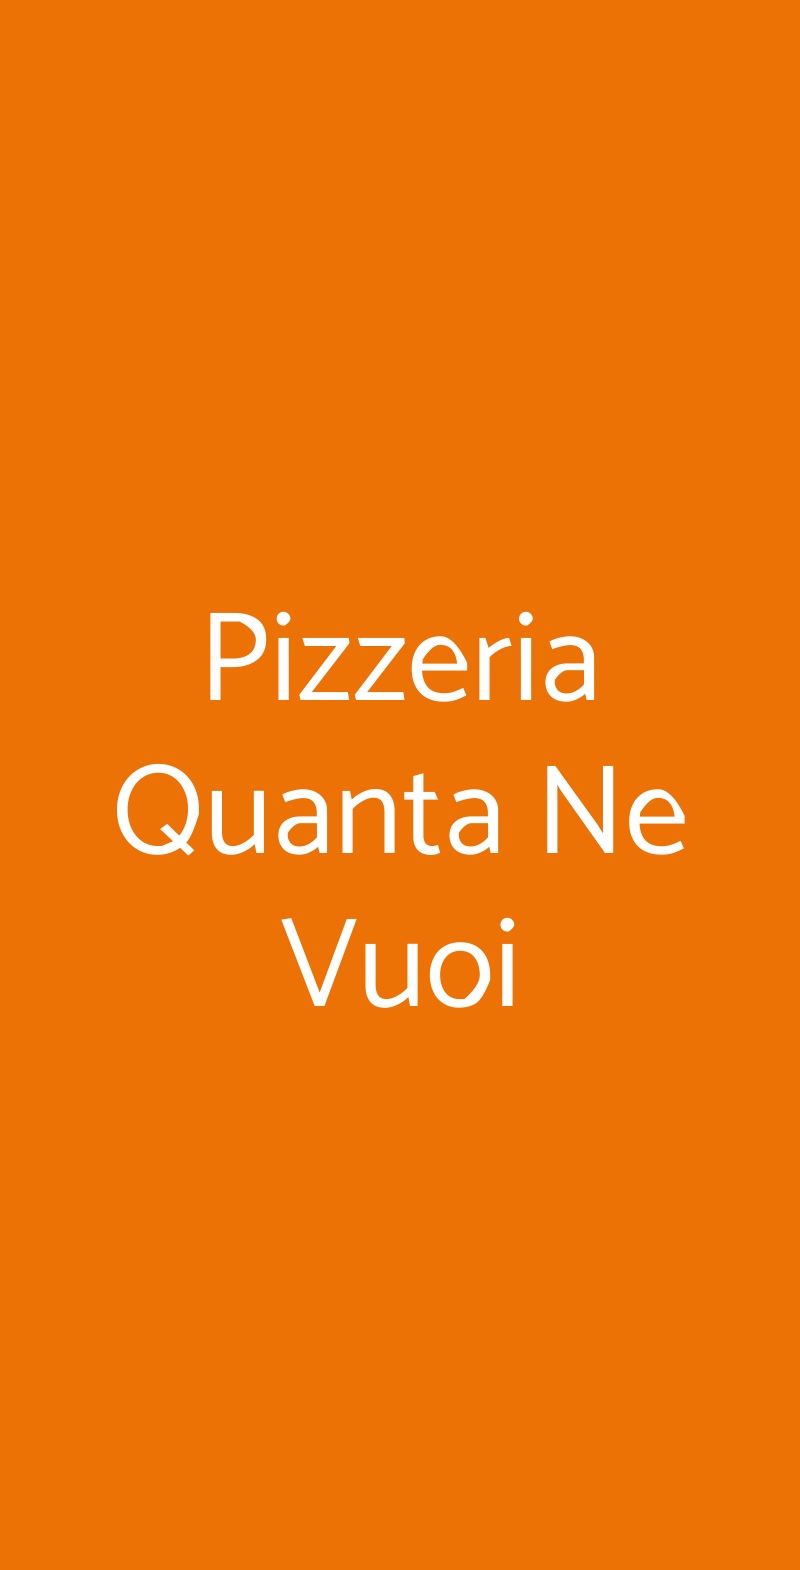 Pizzeria Quanta Ne Vuoi Perugia menù 1 pagina